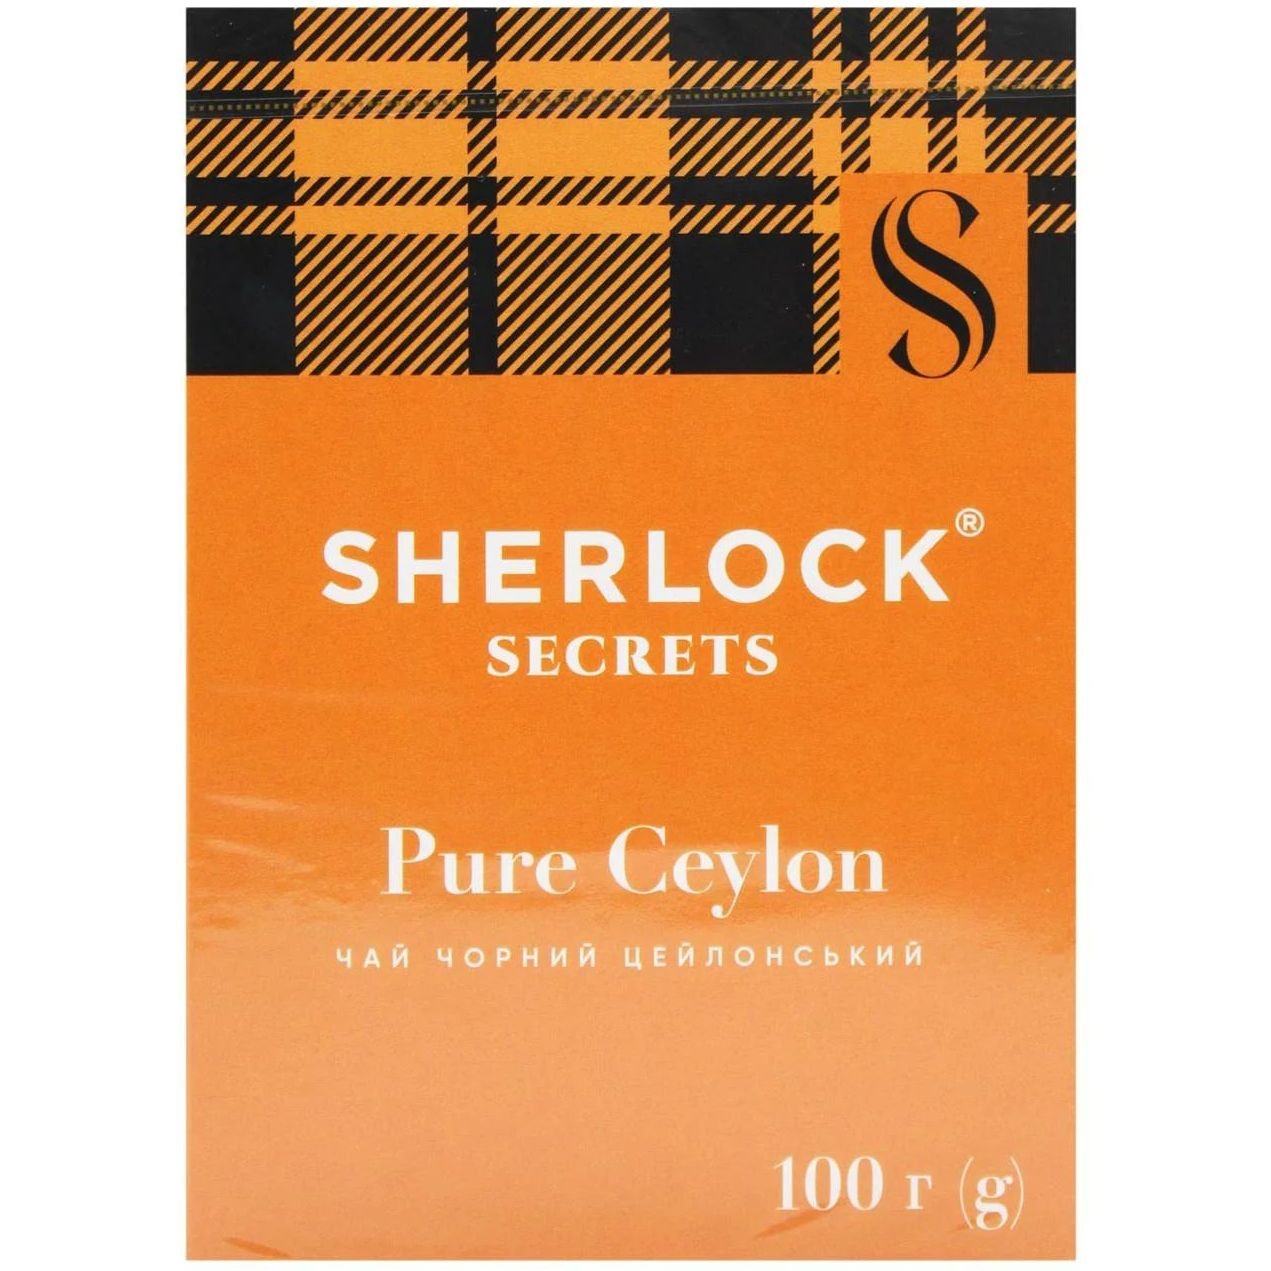 Чай черный Sherlock Secrets Pure Ceylon цейлонский, 100 г (920153) - фото 1